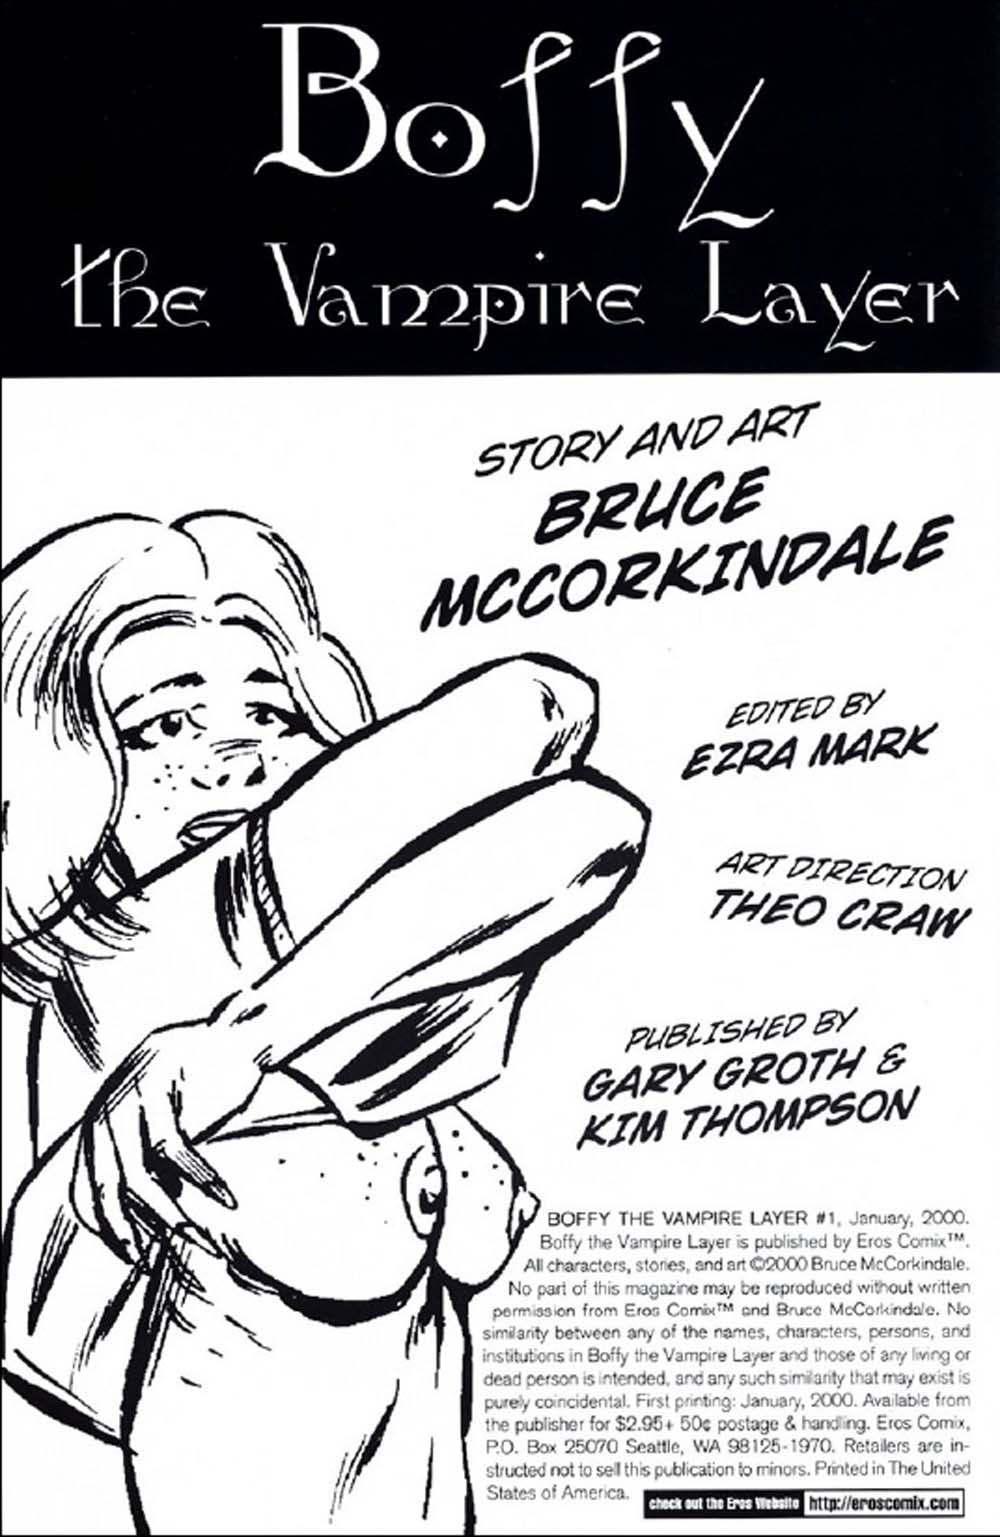 [Bruce Mccorkindale] Boffy The Vampire Layer #1 (Buffy the Vampire Slayer) 